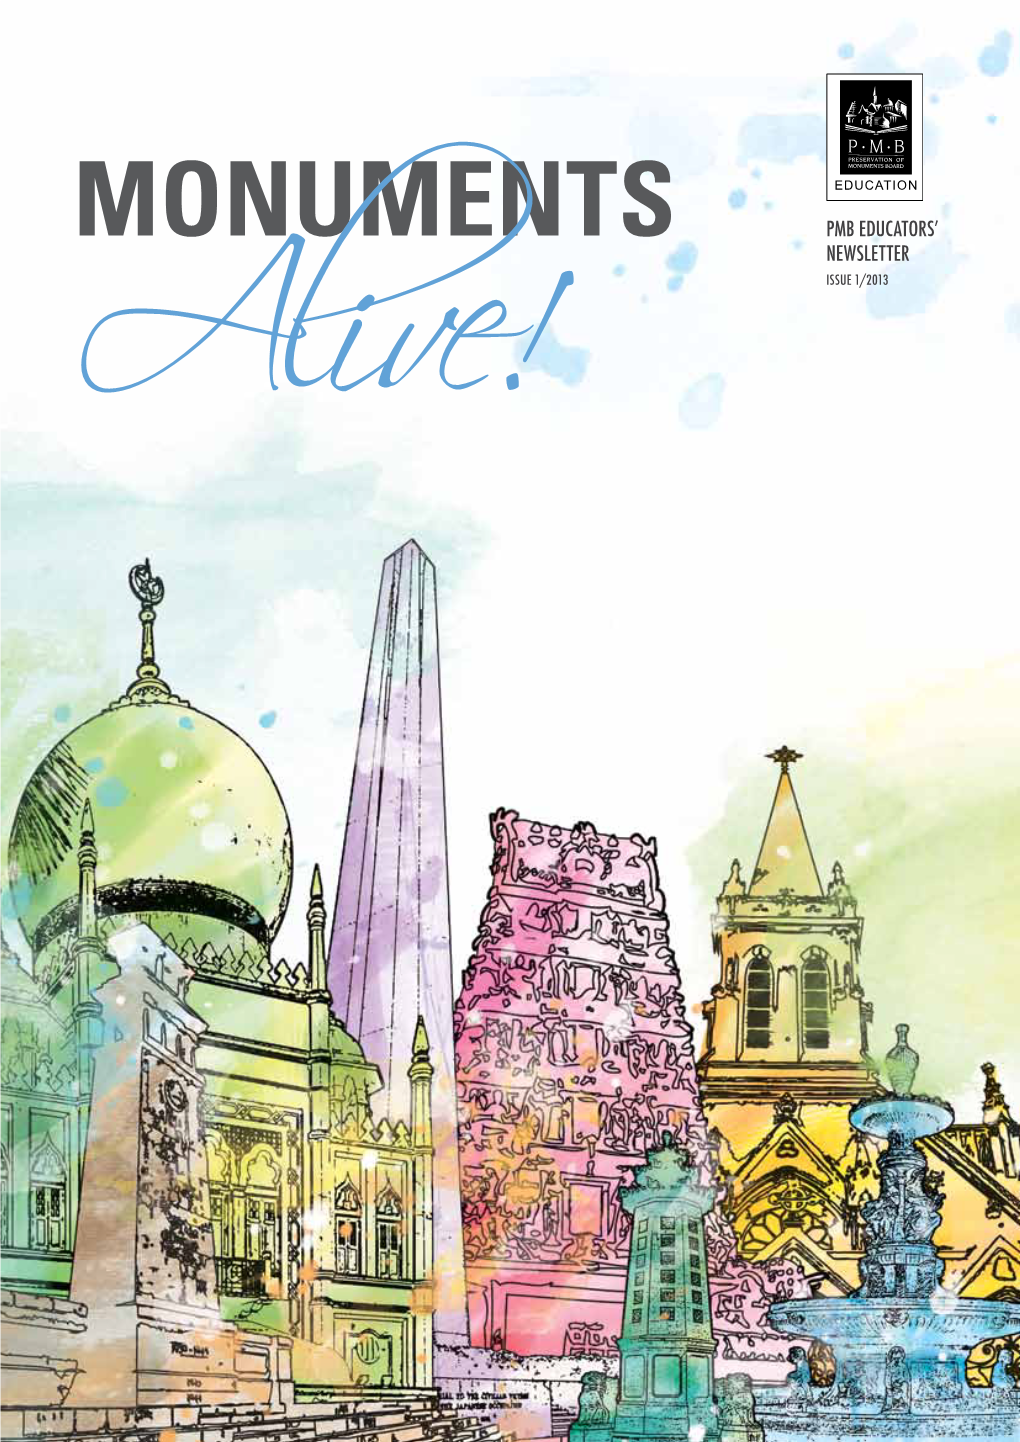 MONUMENTS PMB EDUCATORS’ NEWSLETTER ISSUE 1/2013 Ali Ve! DEAR EDUCATORS